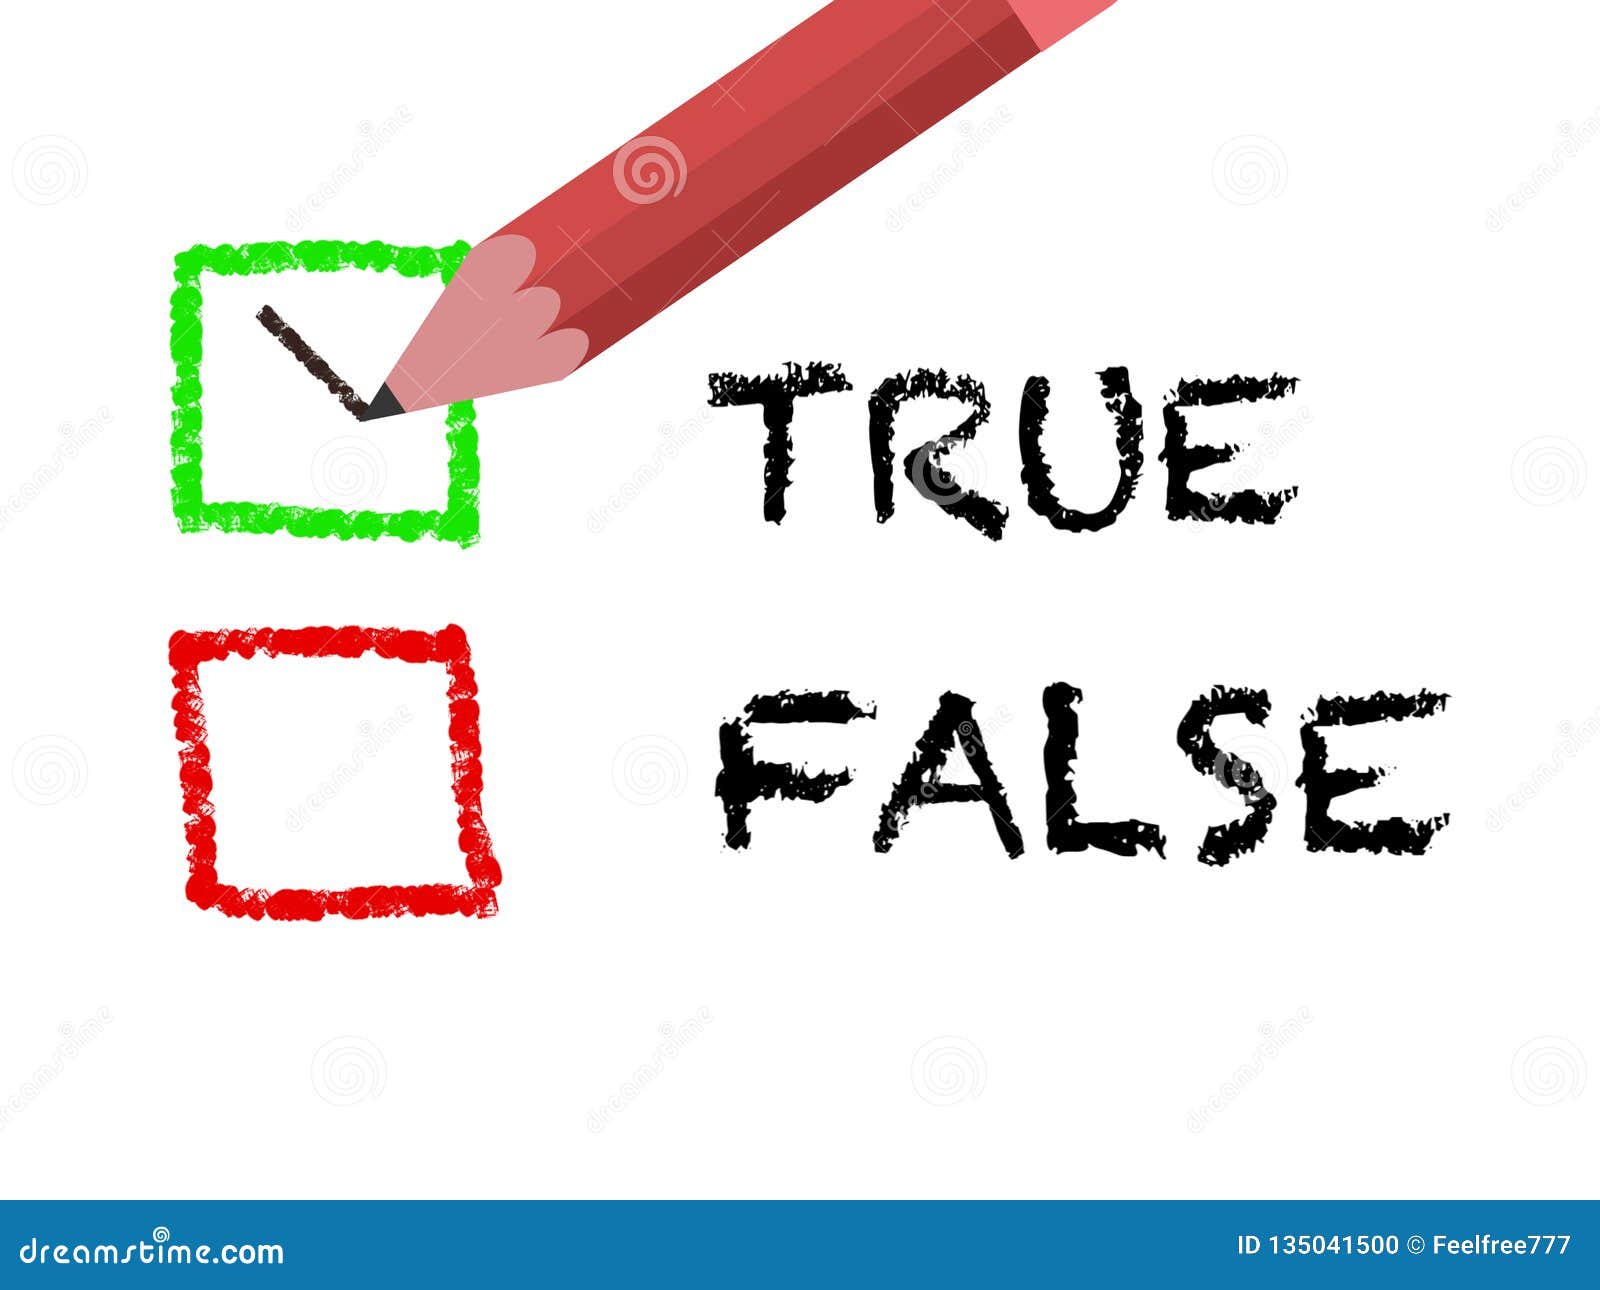 True False Test Stock Illustrations – 1,404 True False Test Stock  Illustrations, Vectors & Clipart - Dreamstime